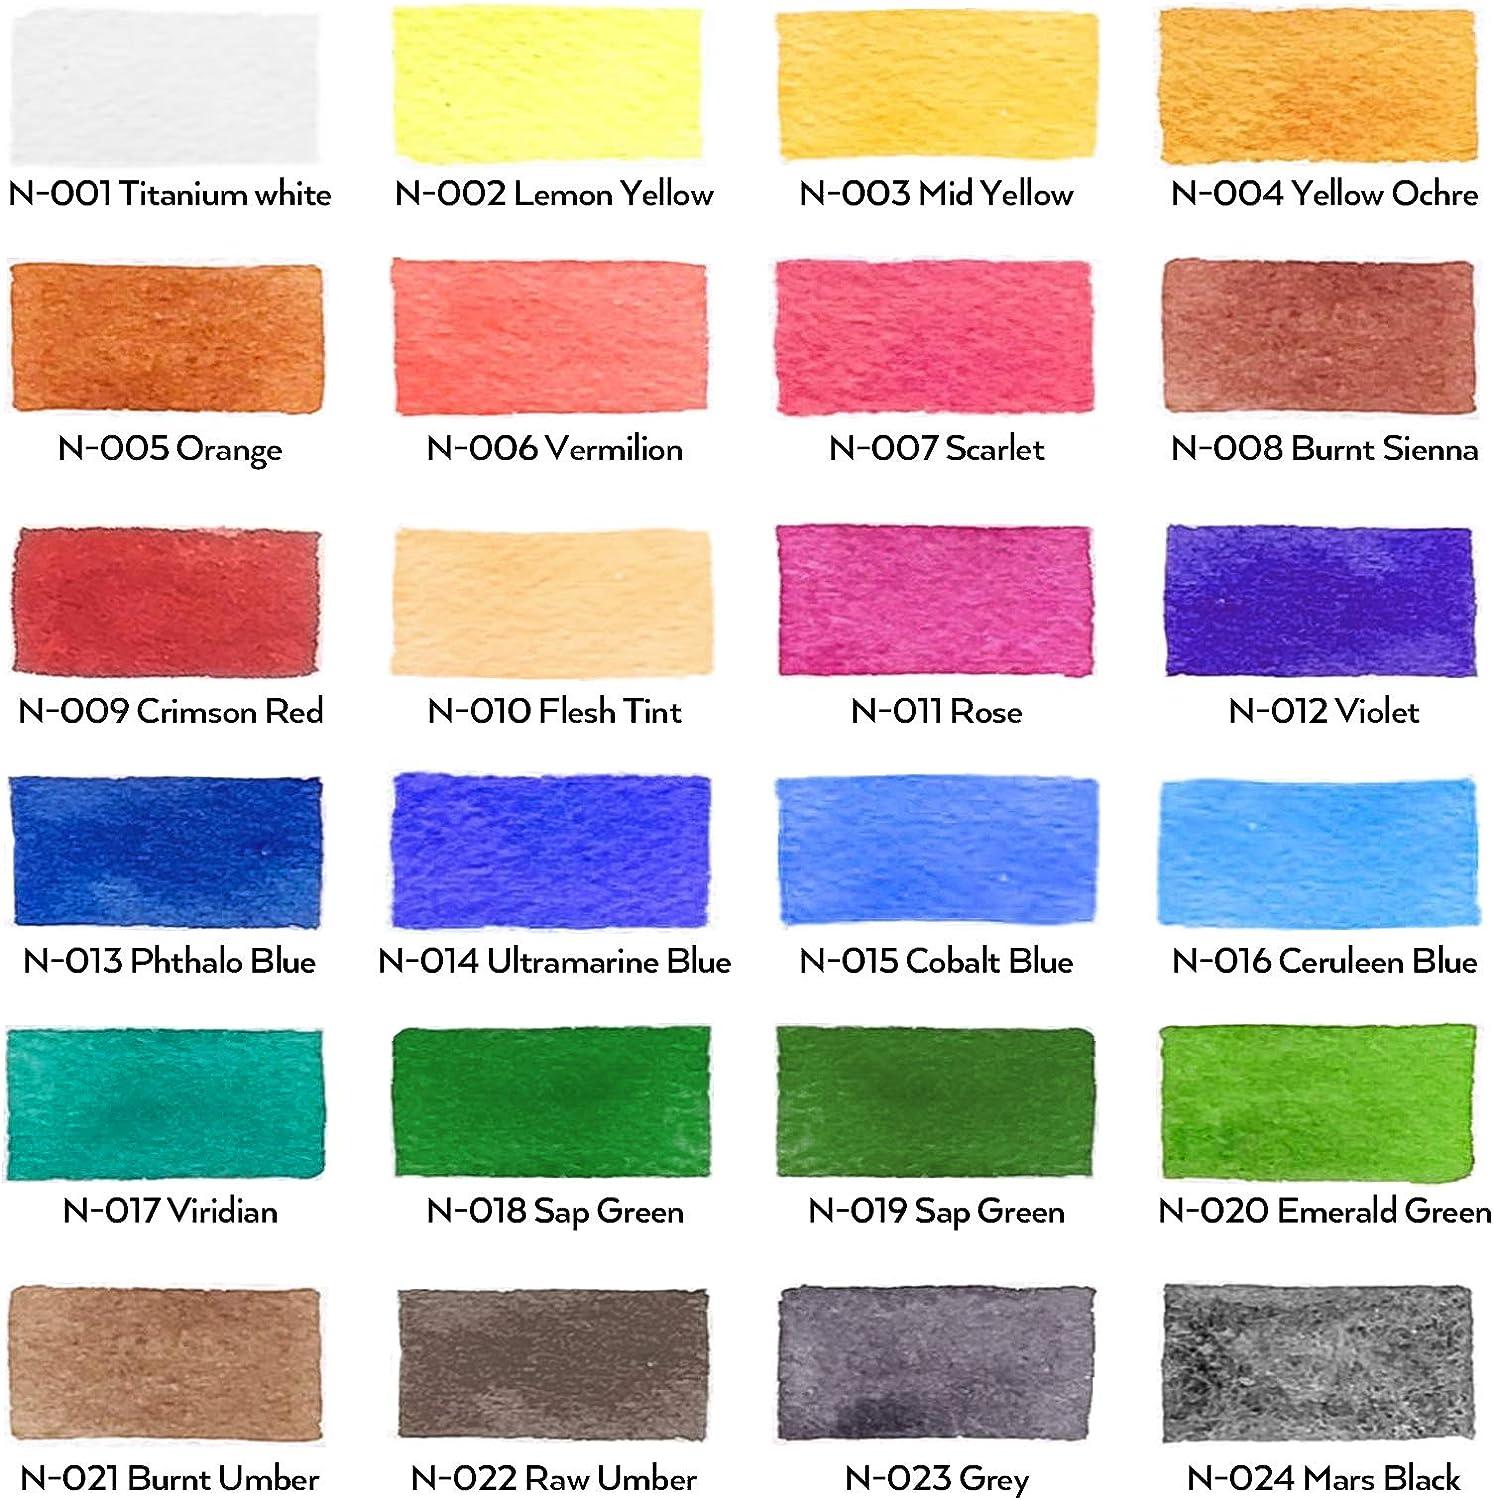  Nicpro 24 Colors Large Bulk Acrylic Paint Set (16.9 oz